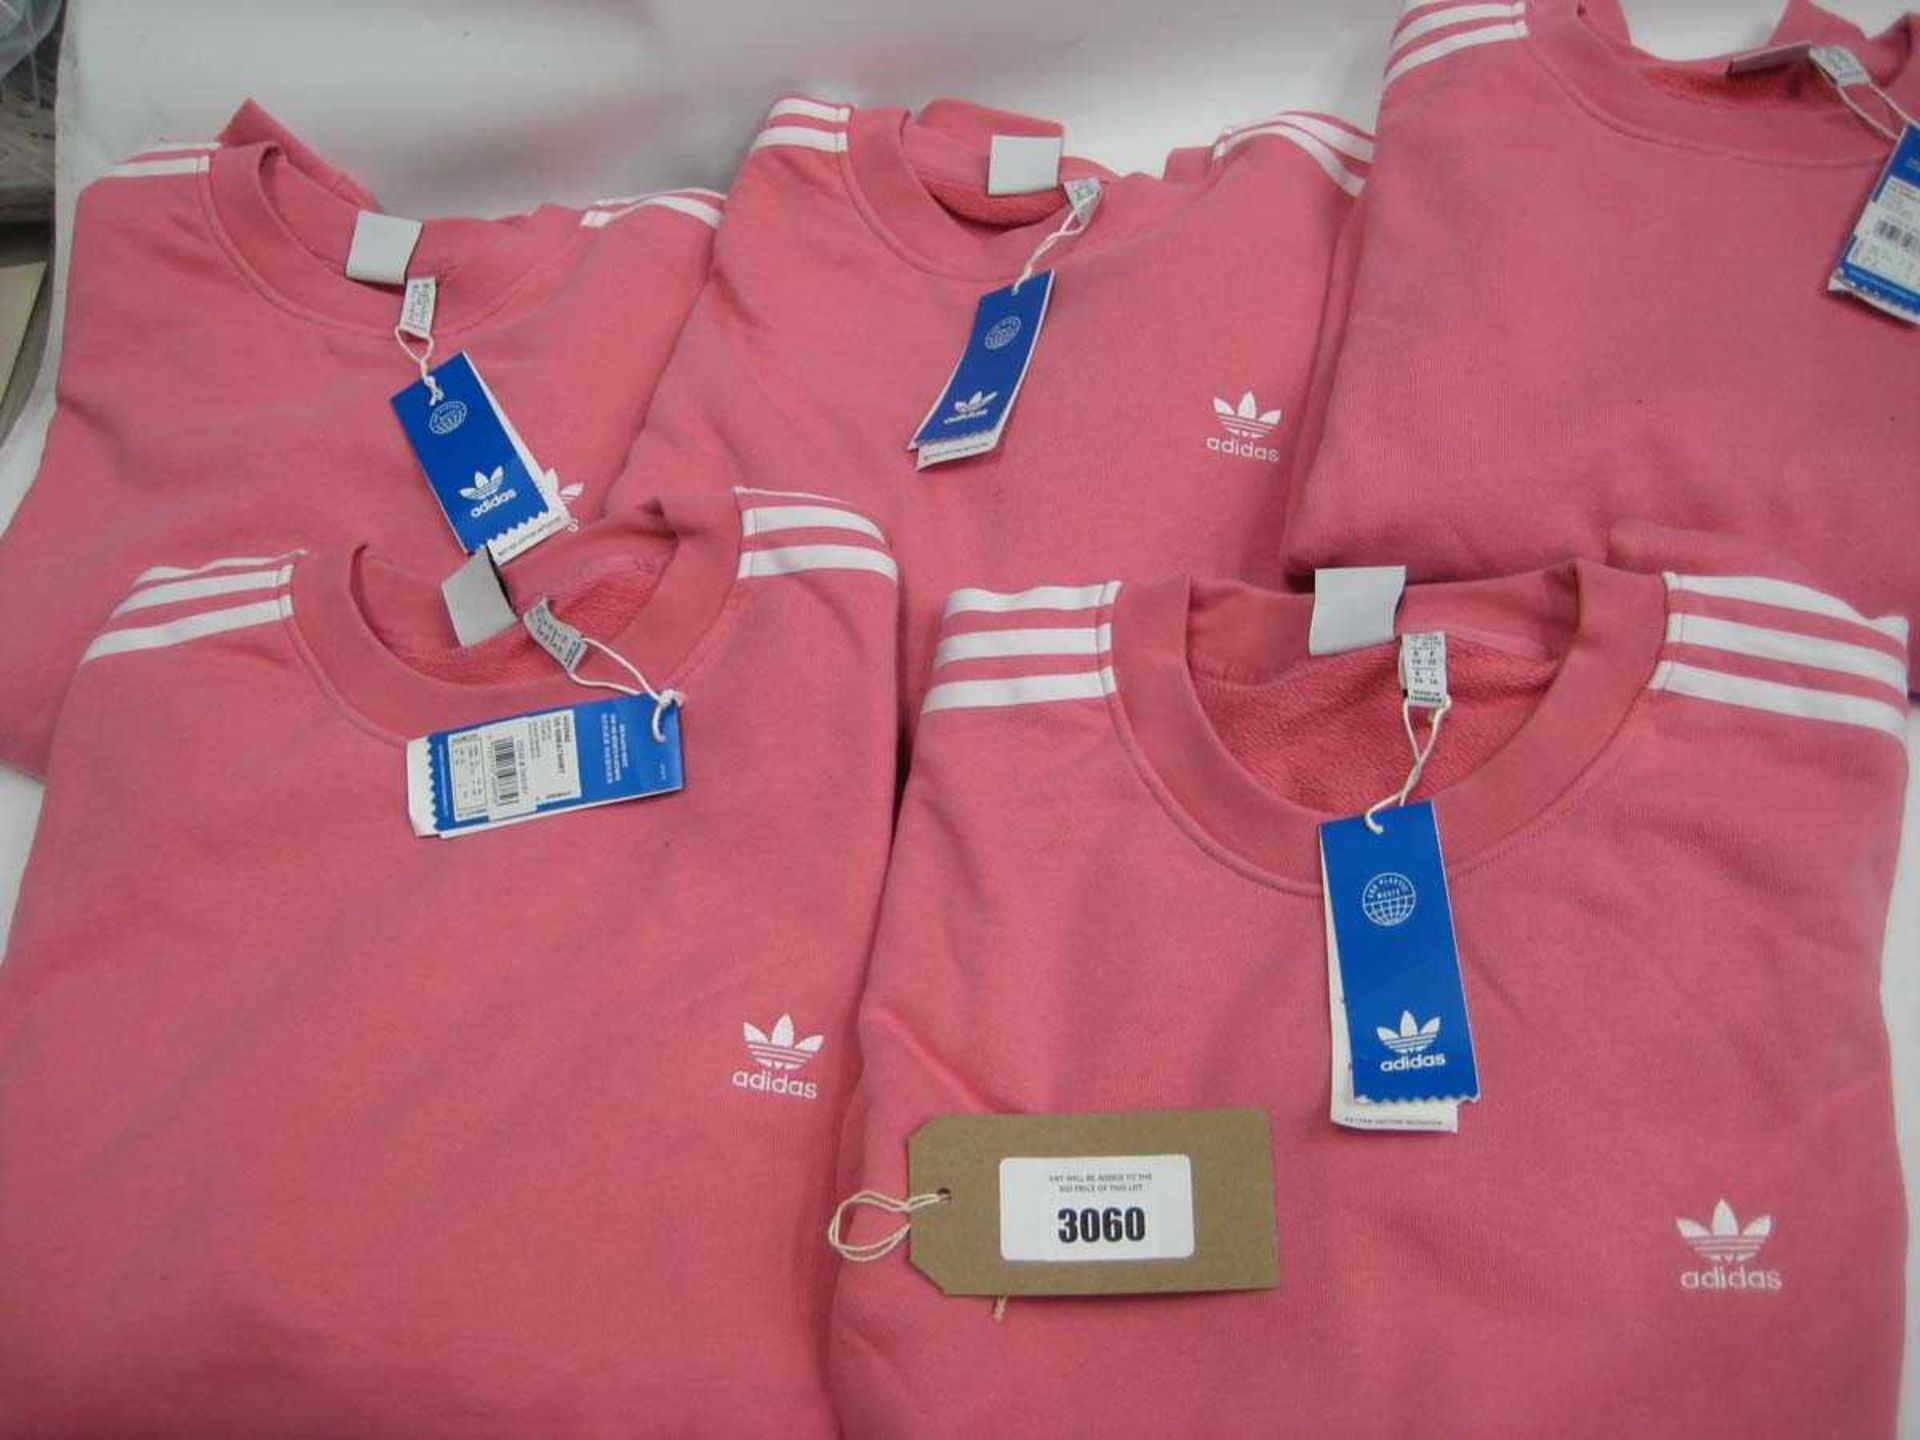 +VAT A bag containing 5 Ladies Pink Adidas Sweatshirts in X Large.